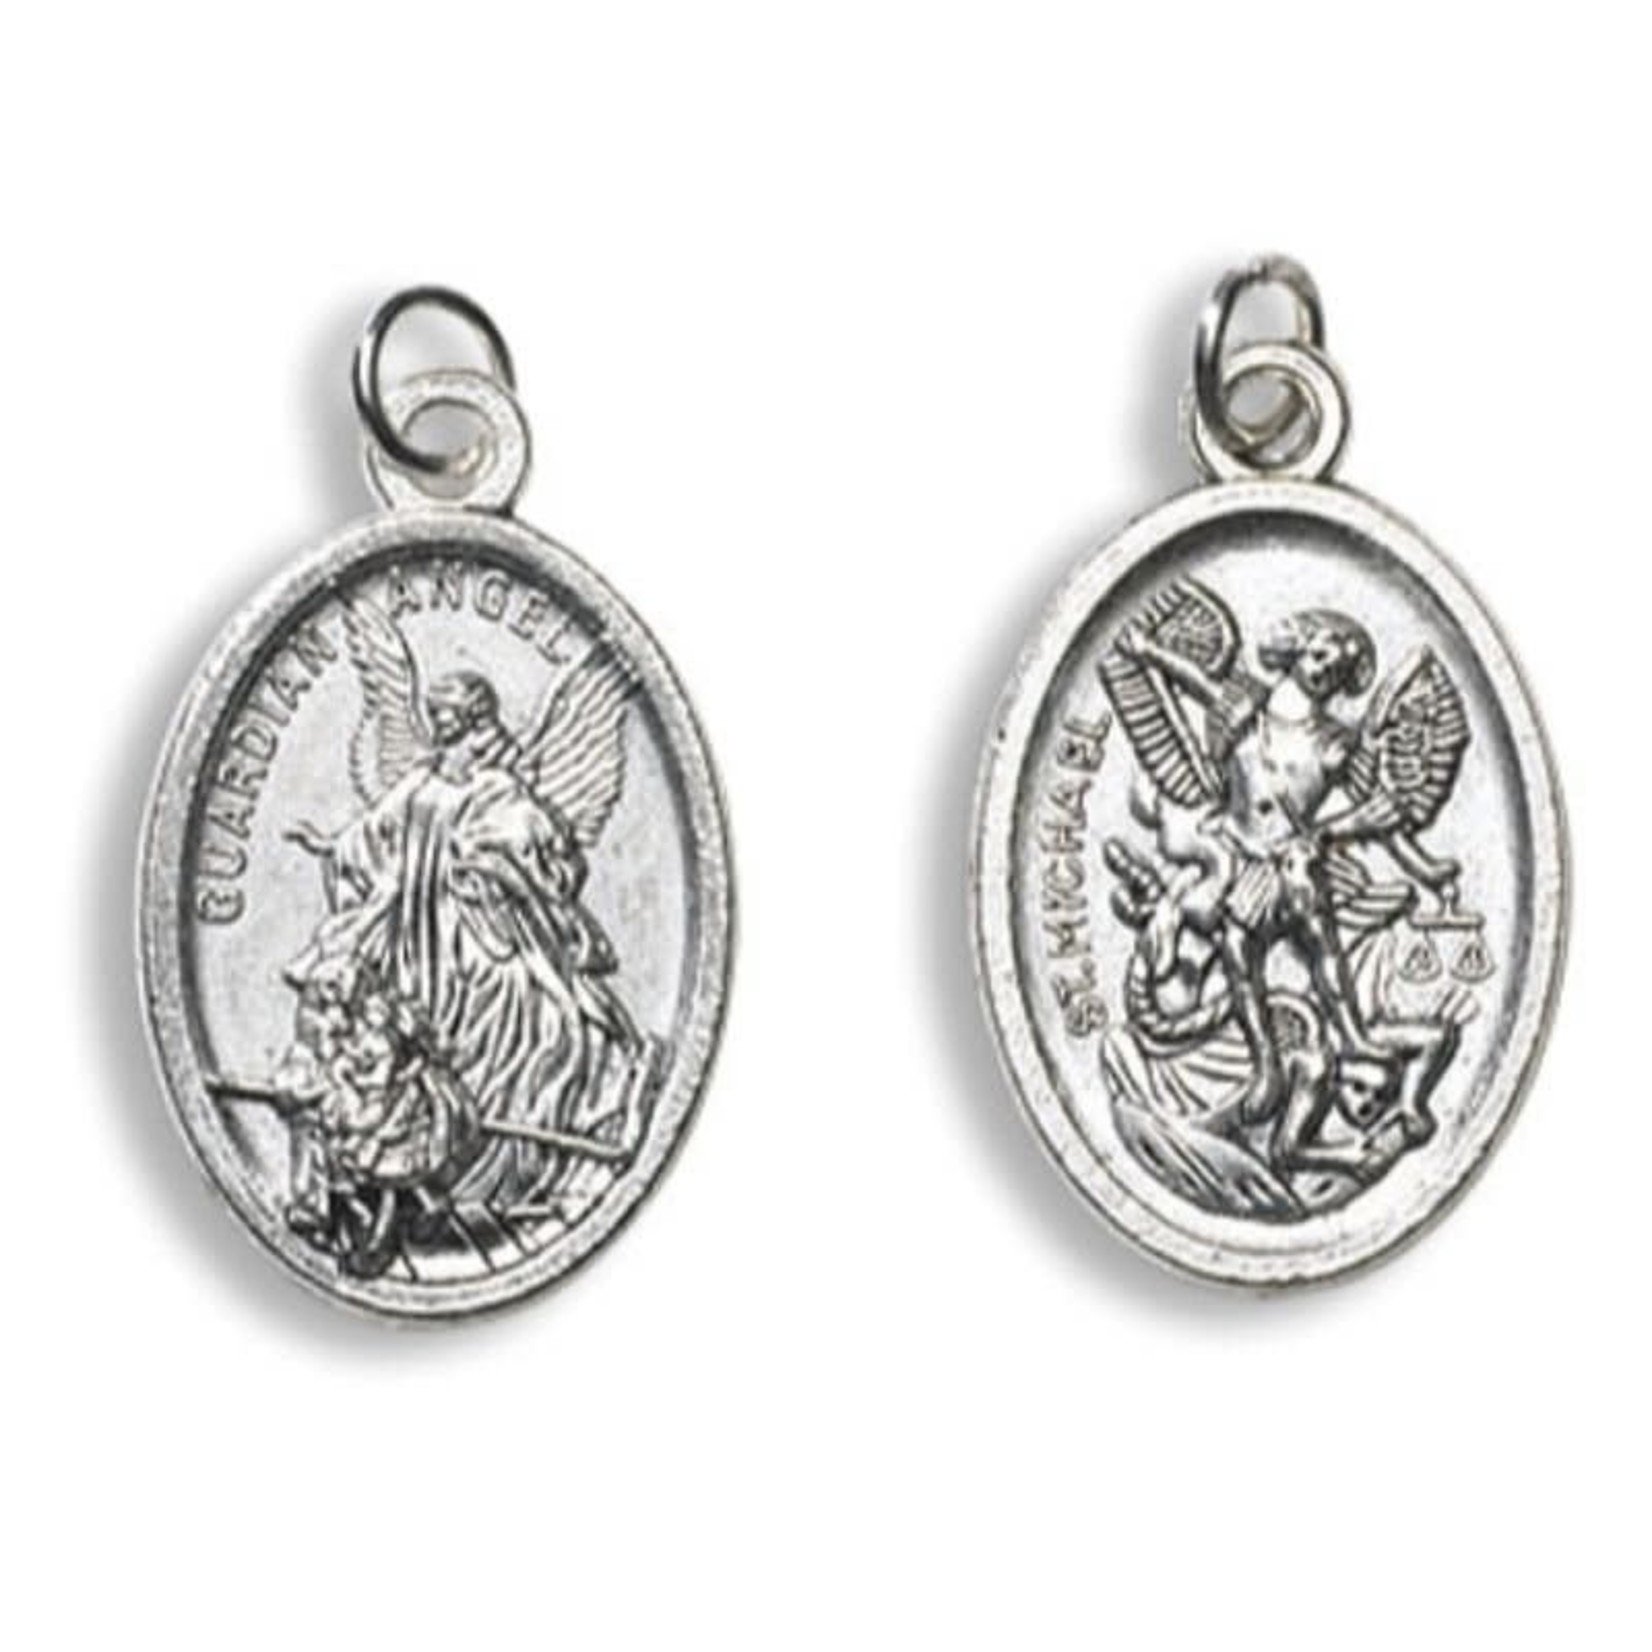 Saint Michael/ Guardian Angel Medal (Standard)